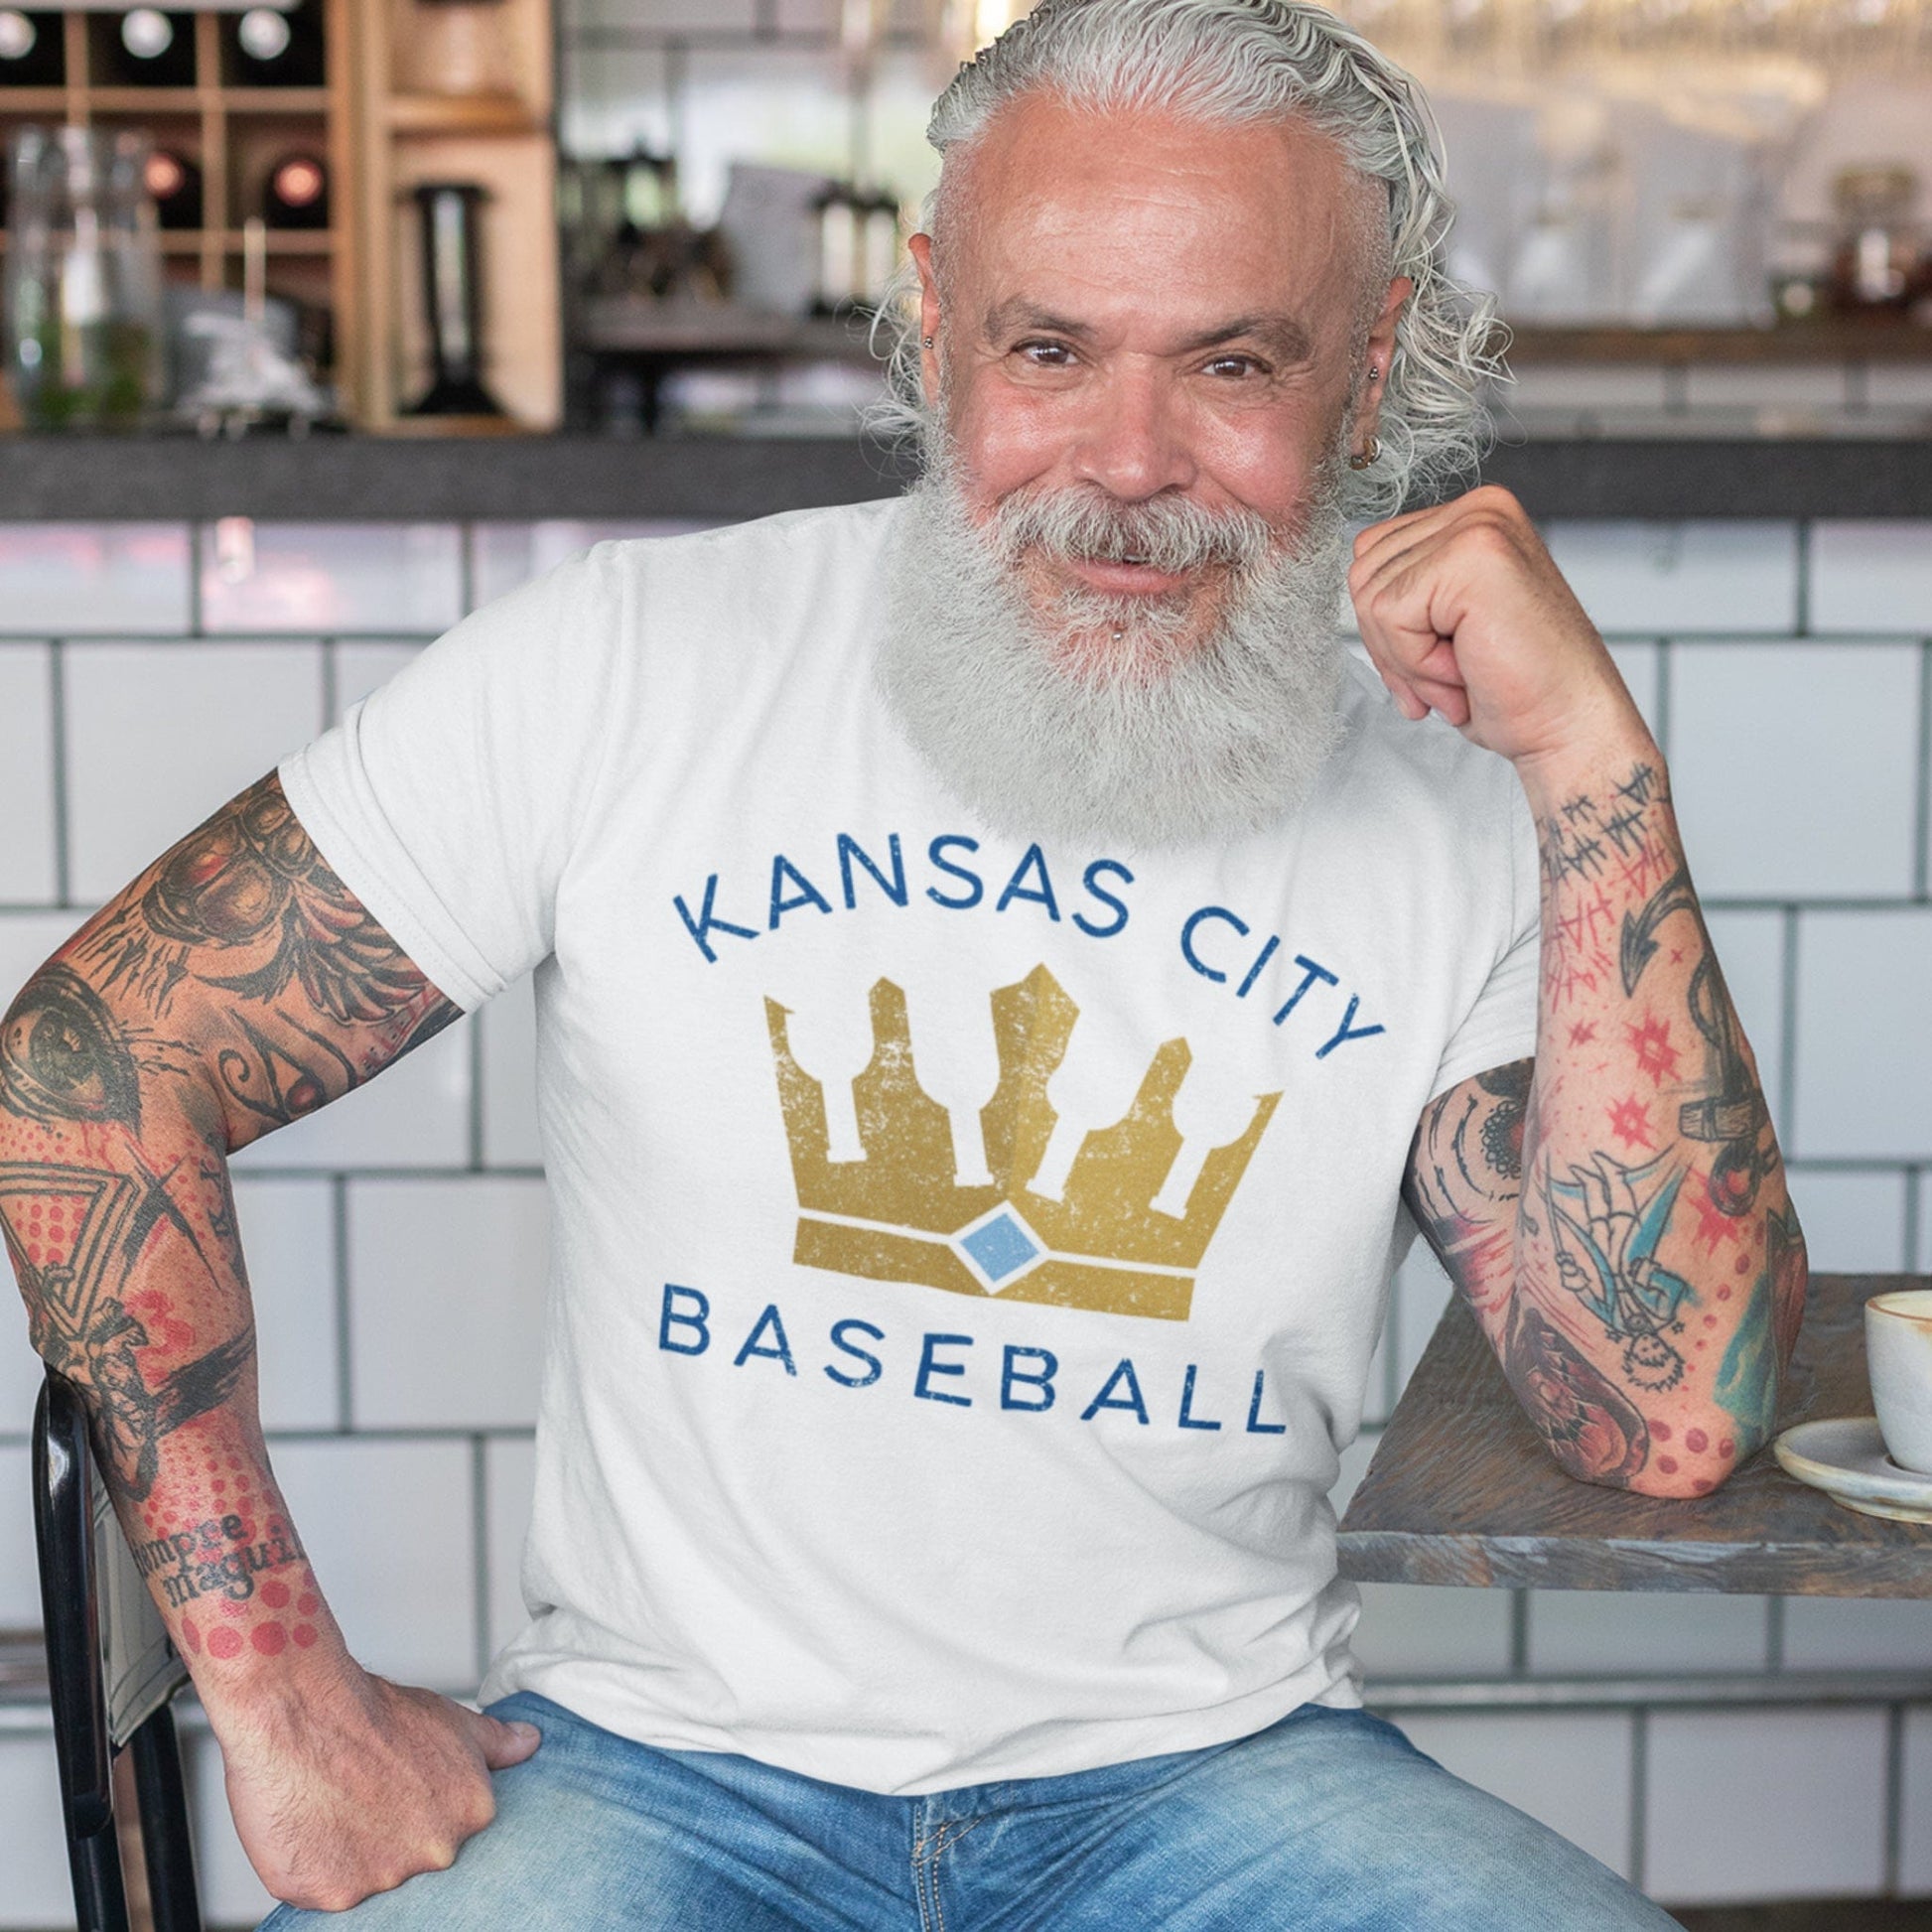 KC Swag Kansas City Royals gold/blue KANSAS CITY BASEBALL BOTTLE CROWN on white t-shirt worn by grey bearded male model sitting in cafe